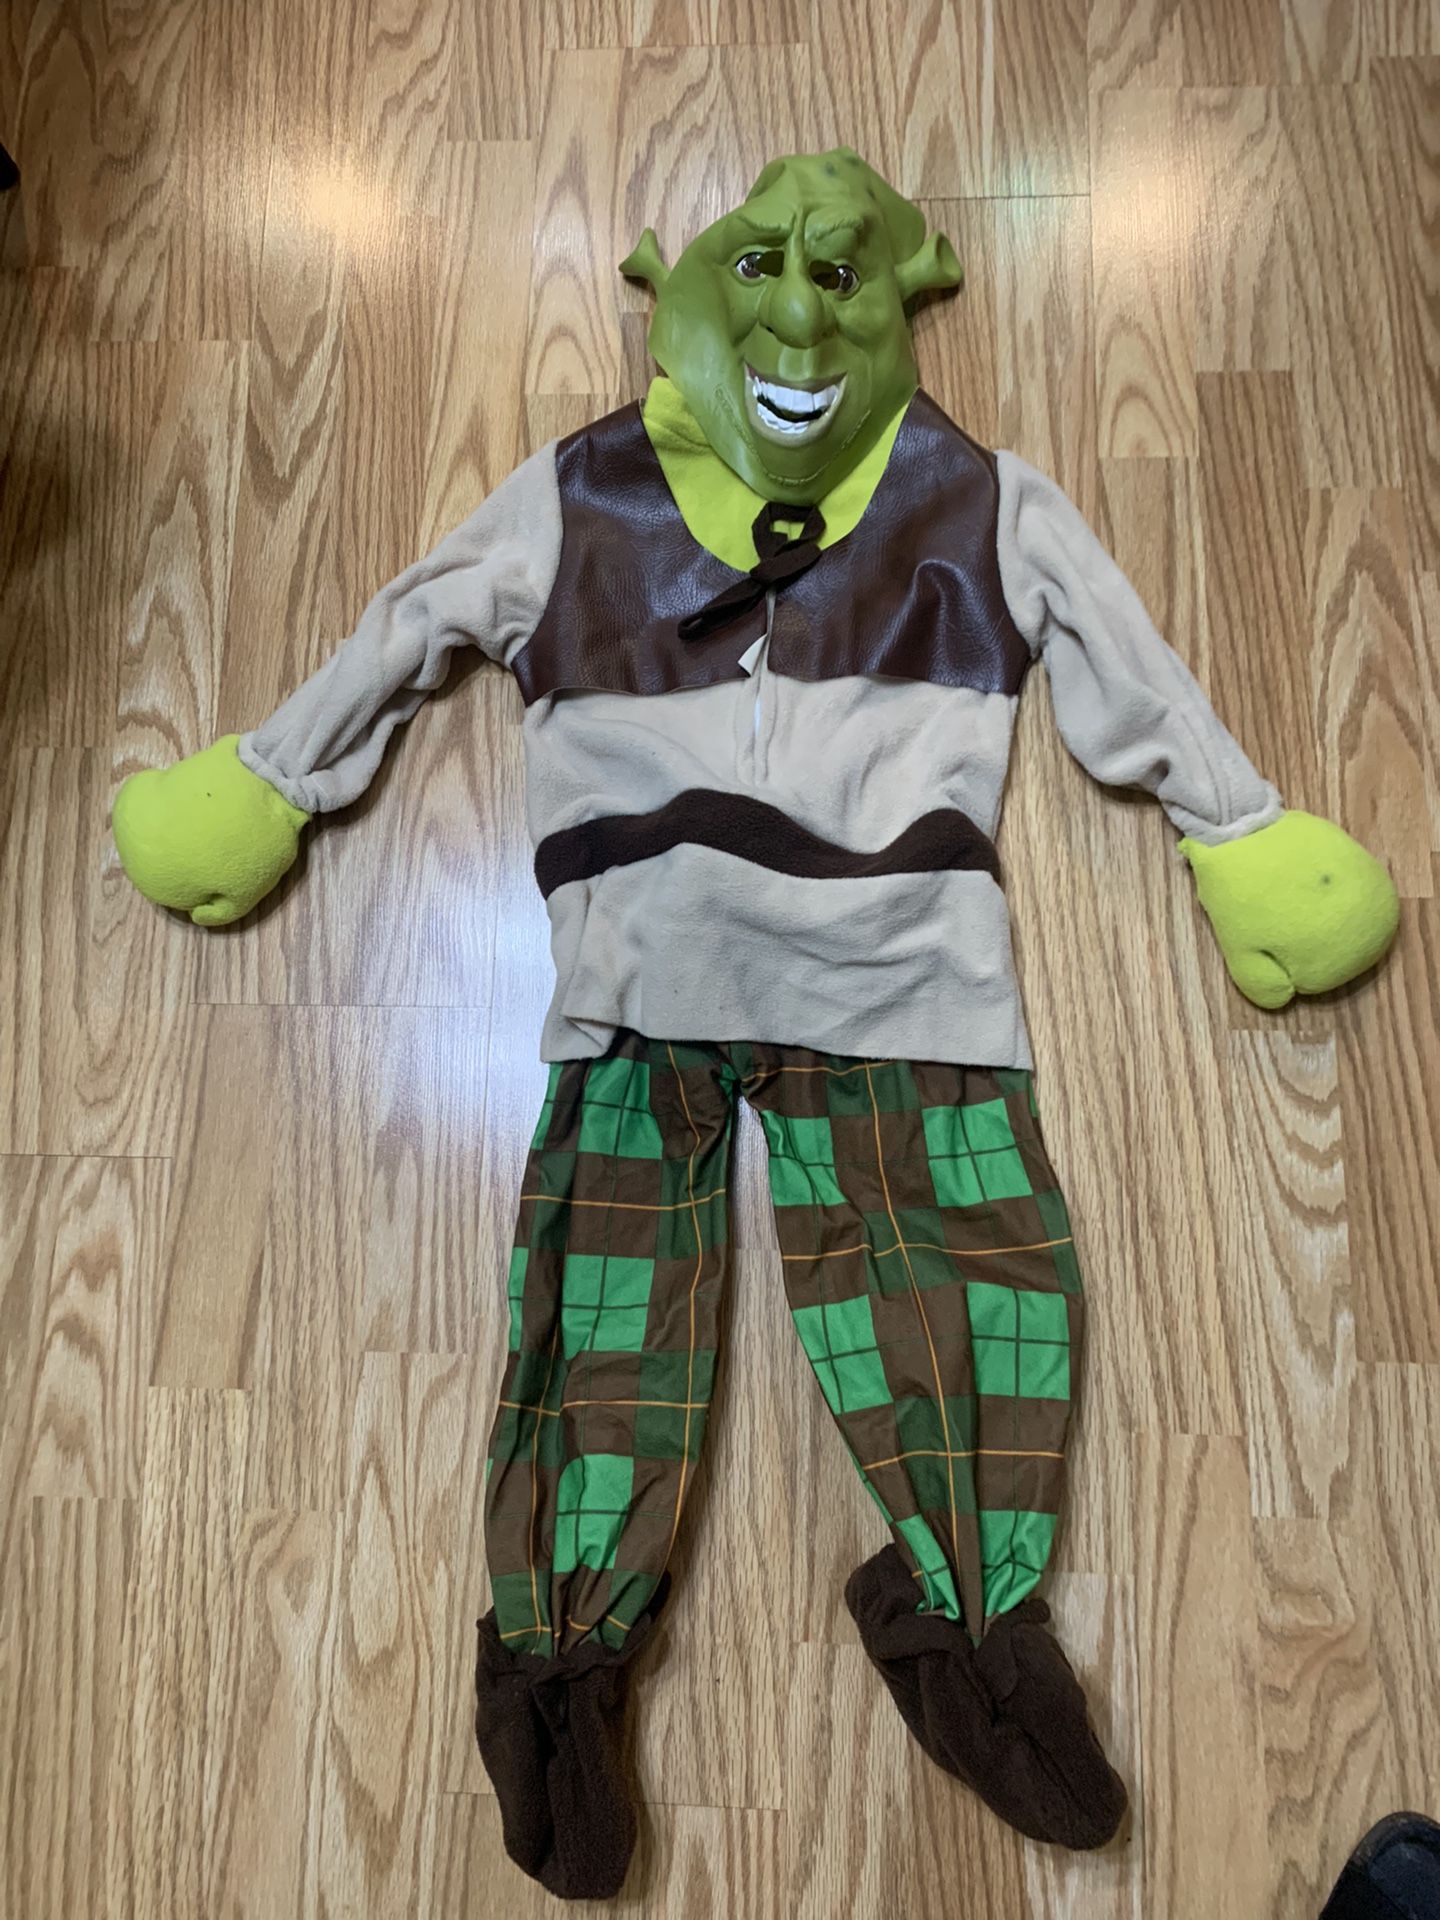 Halloween Costume Shrek 2, Size S Toddler (3-4years), $8